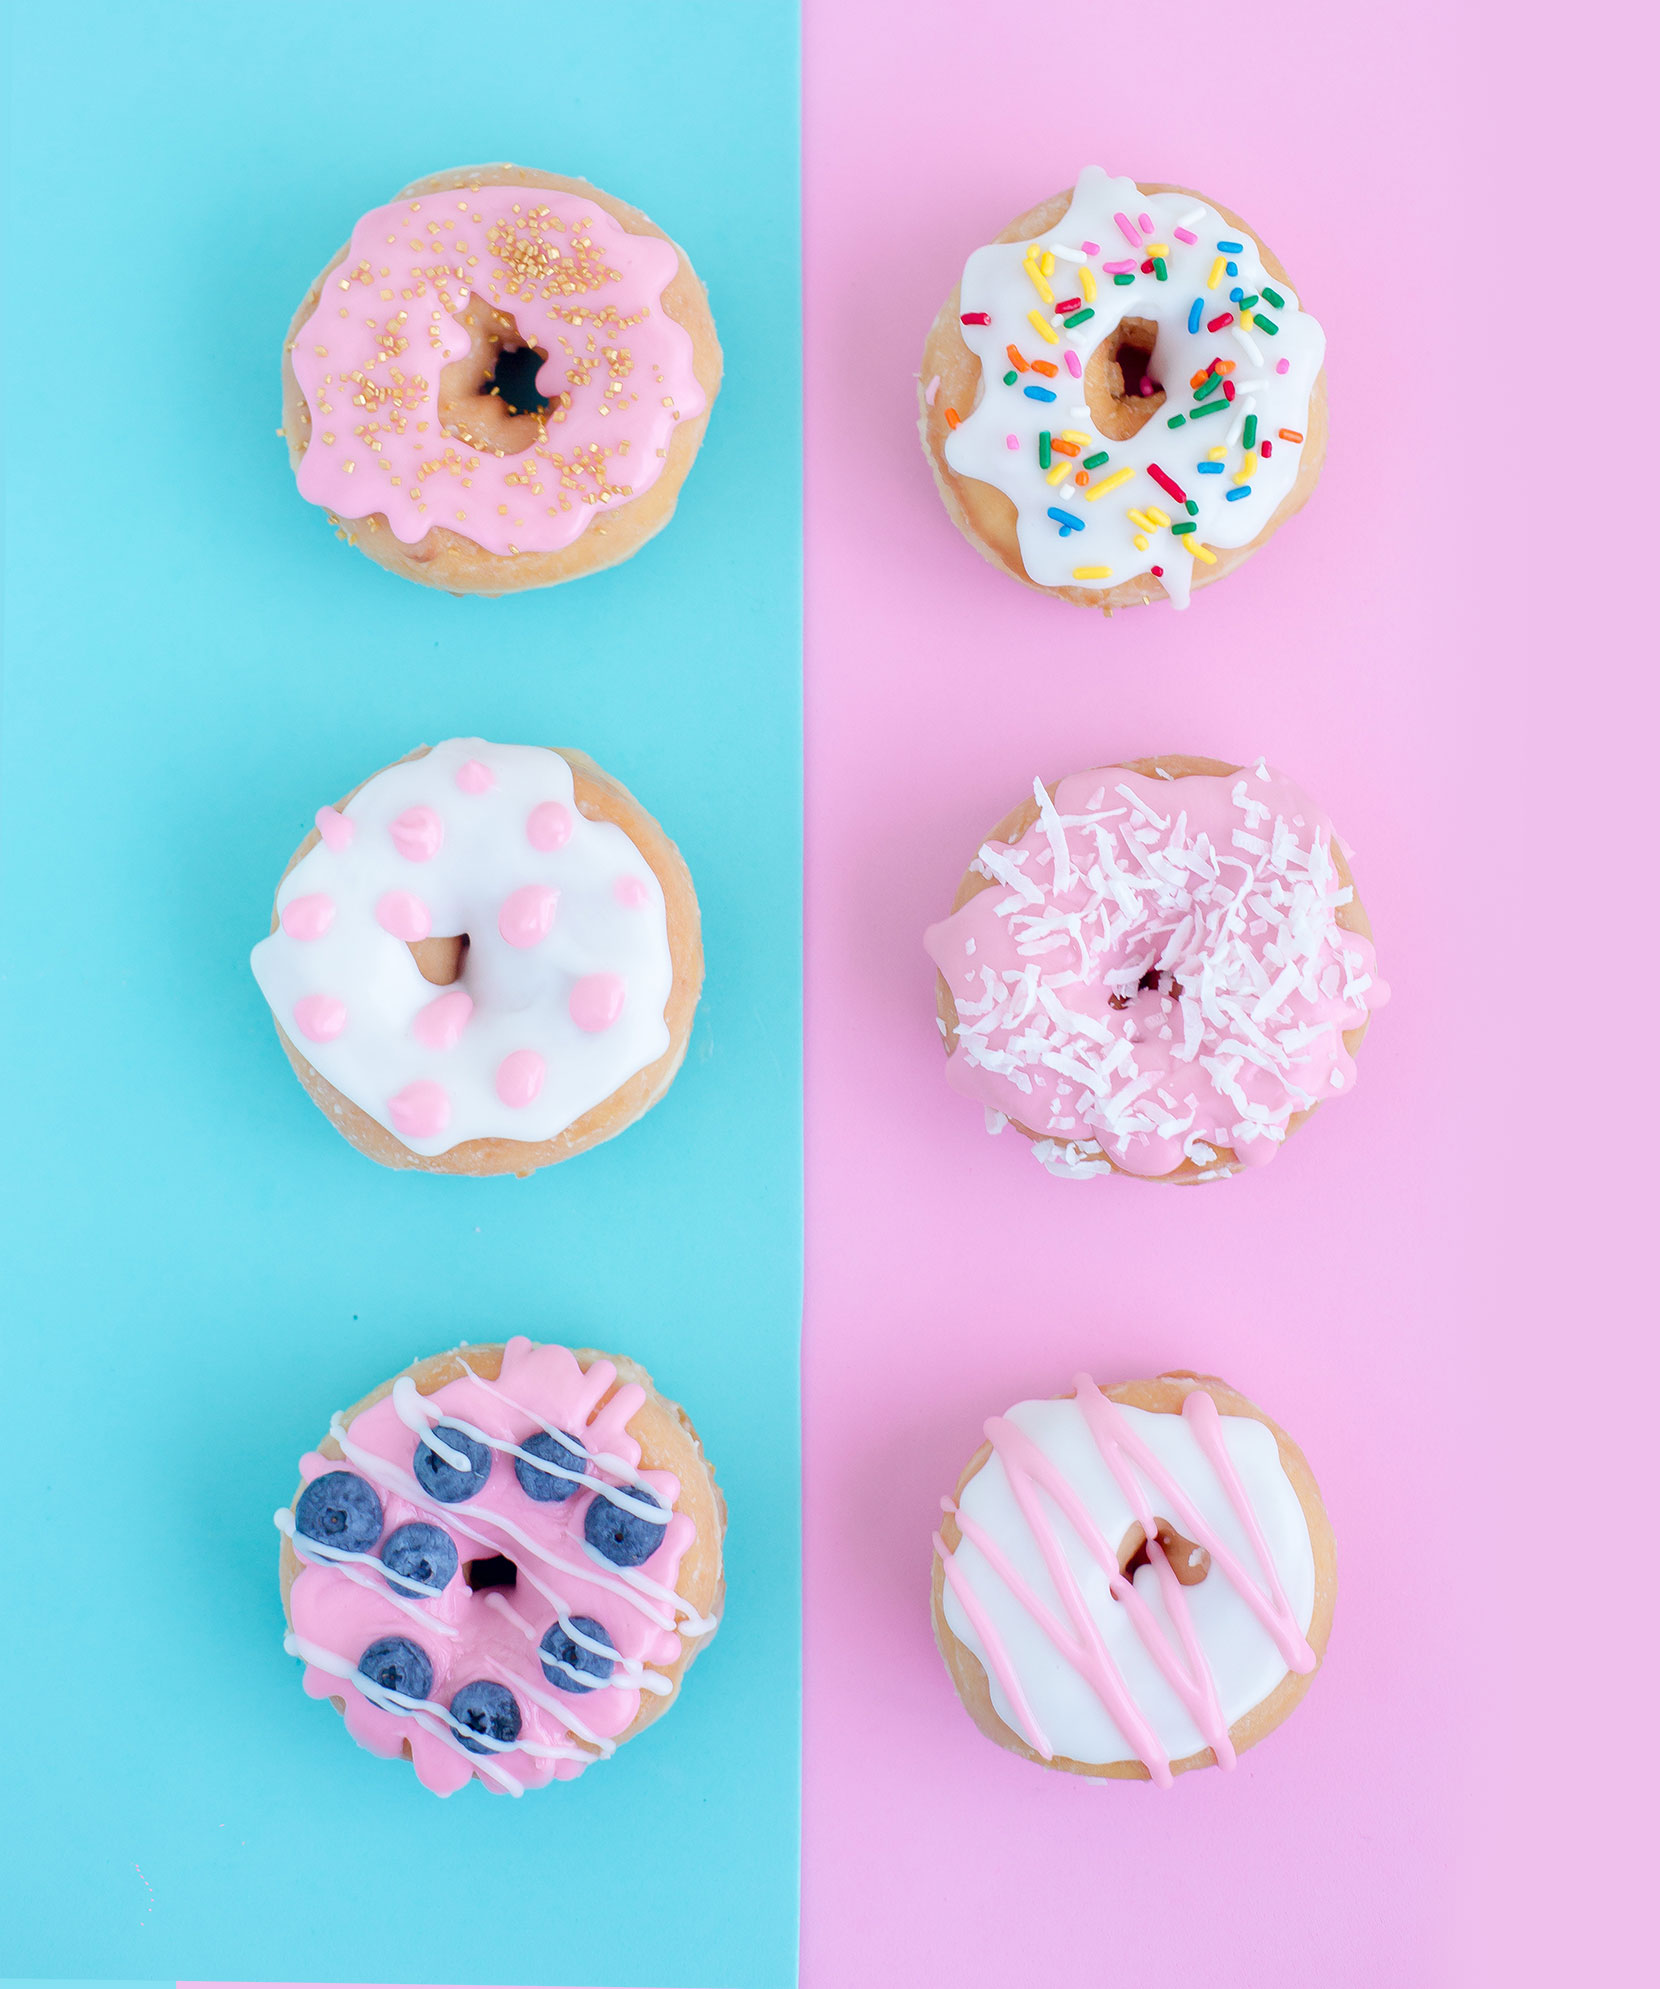 Colors in doughnuts